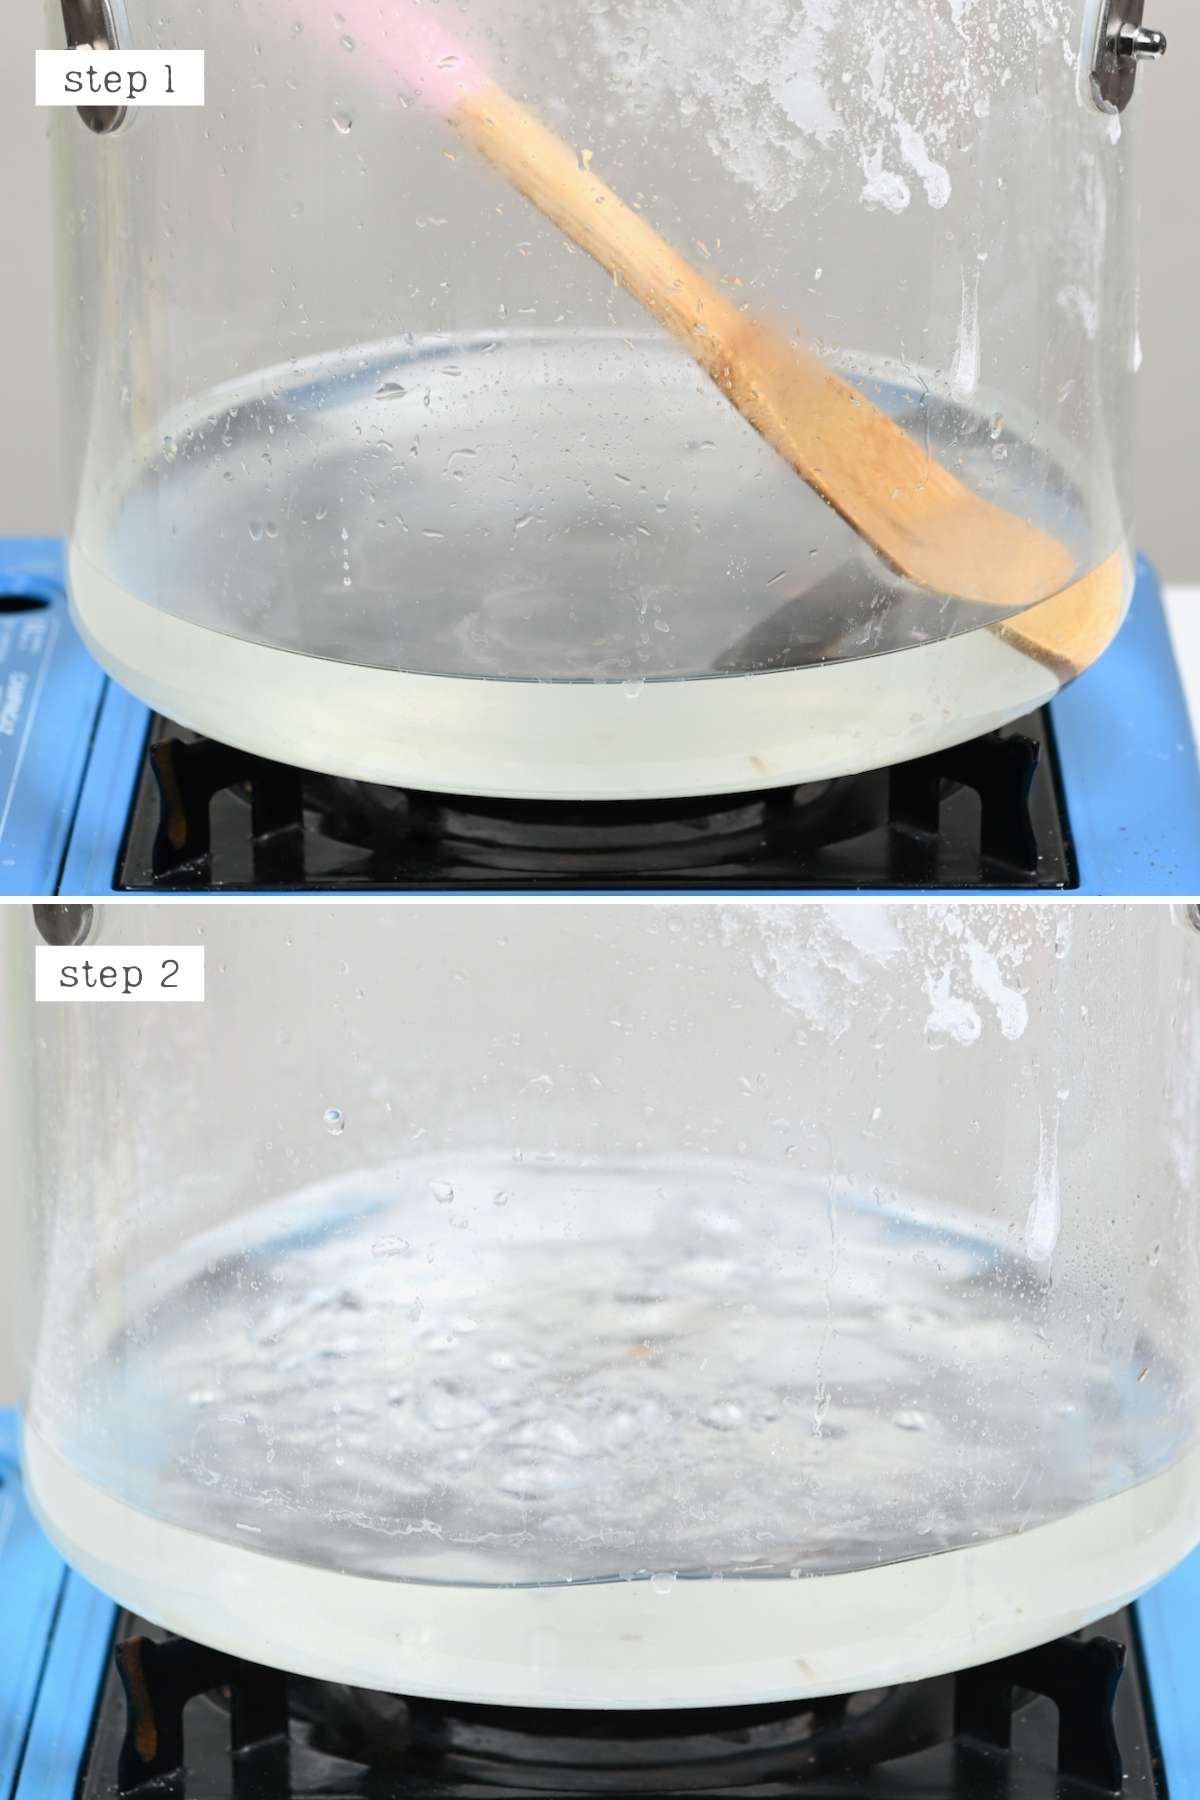 Dissolving salt in water